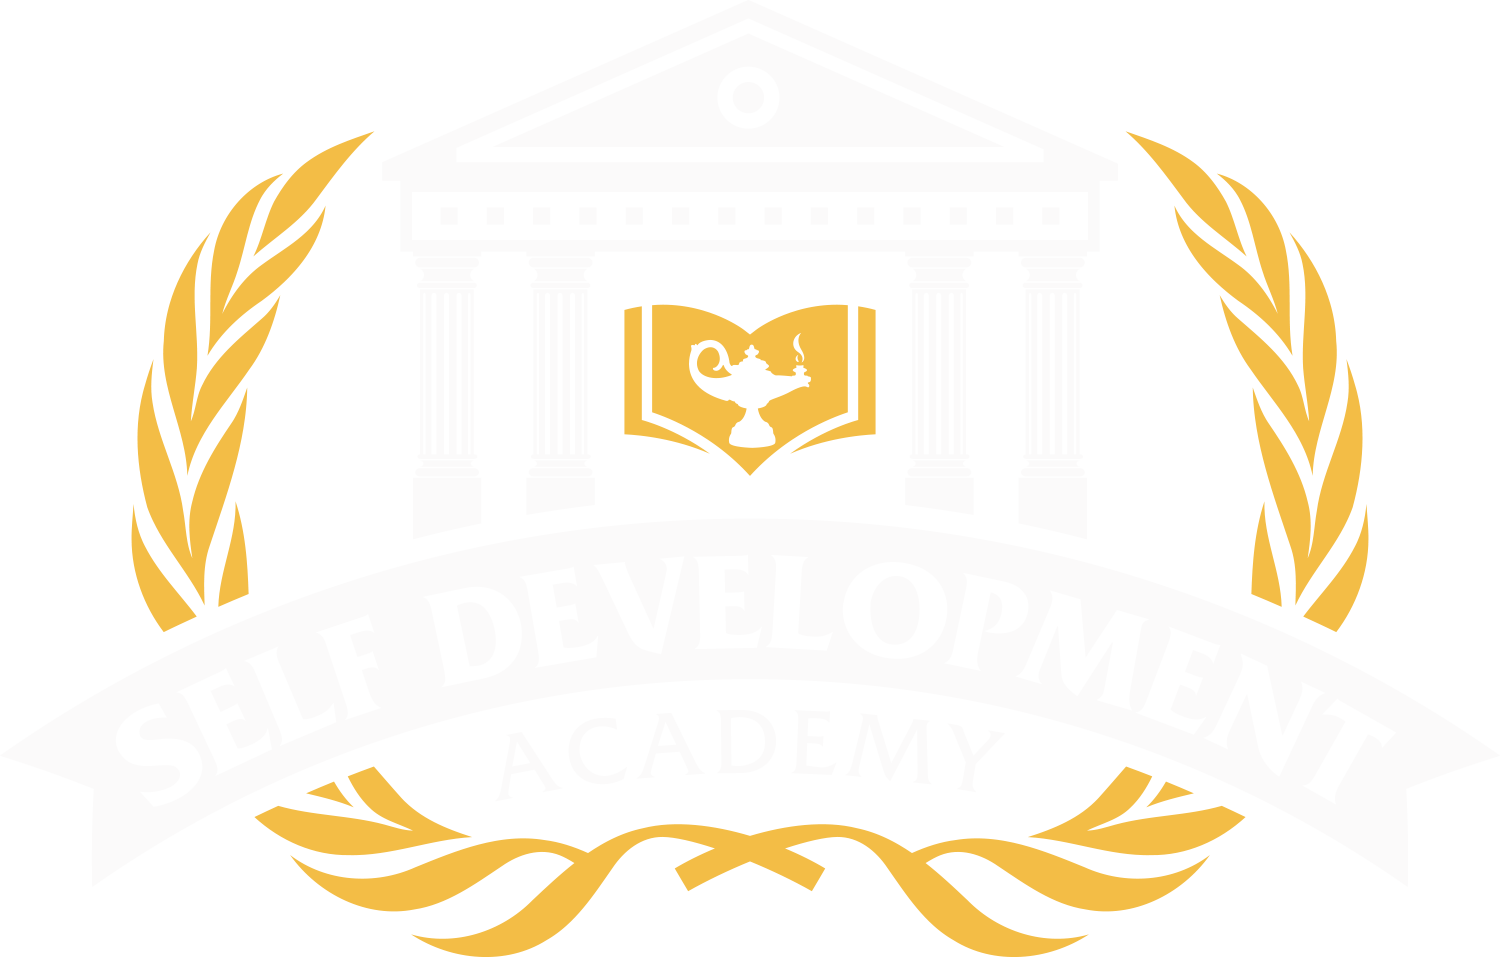 Self Development Academy - Genius, Unlimited.